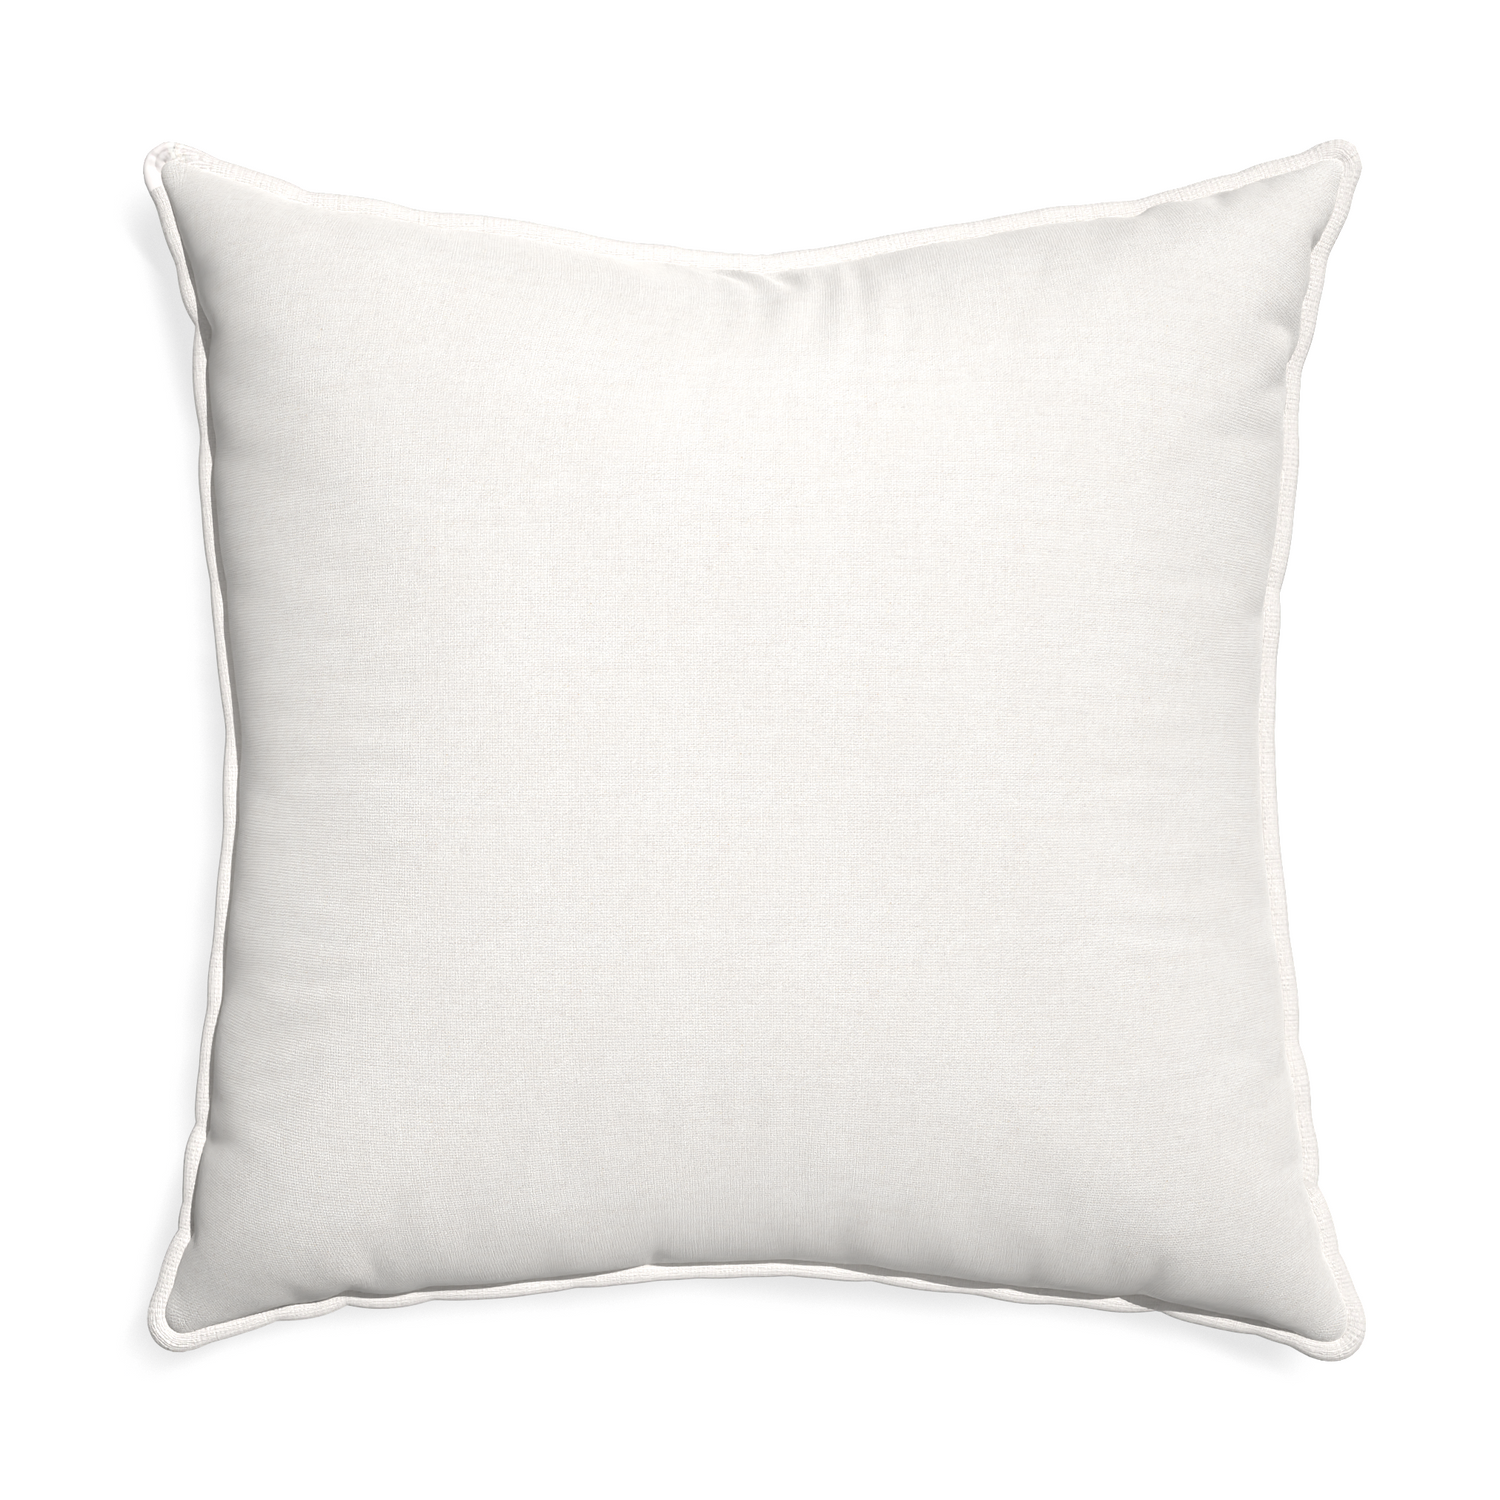 Euro-sham flour custom pillow with snow piping on white background